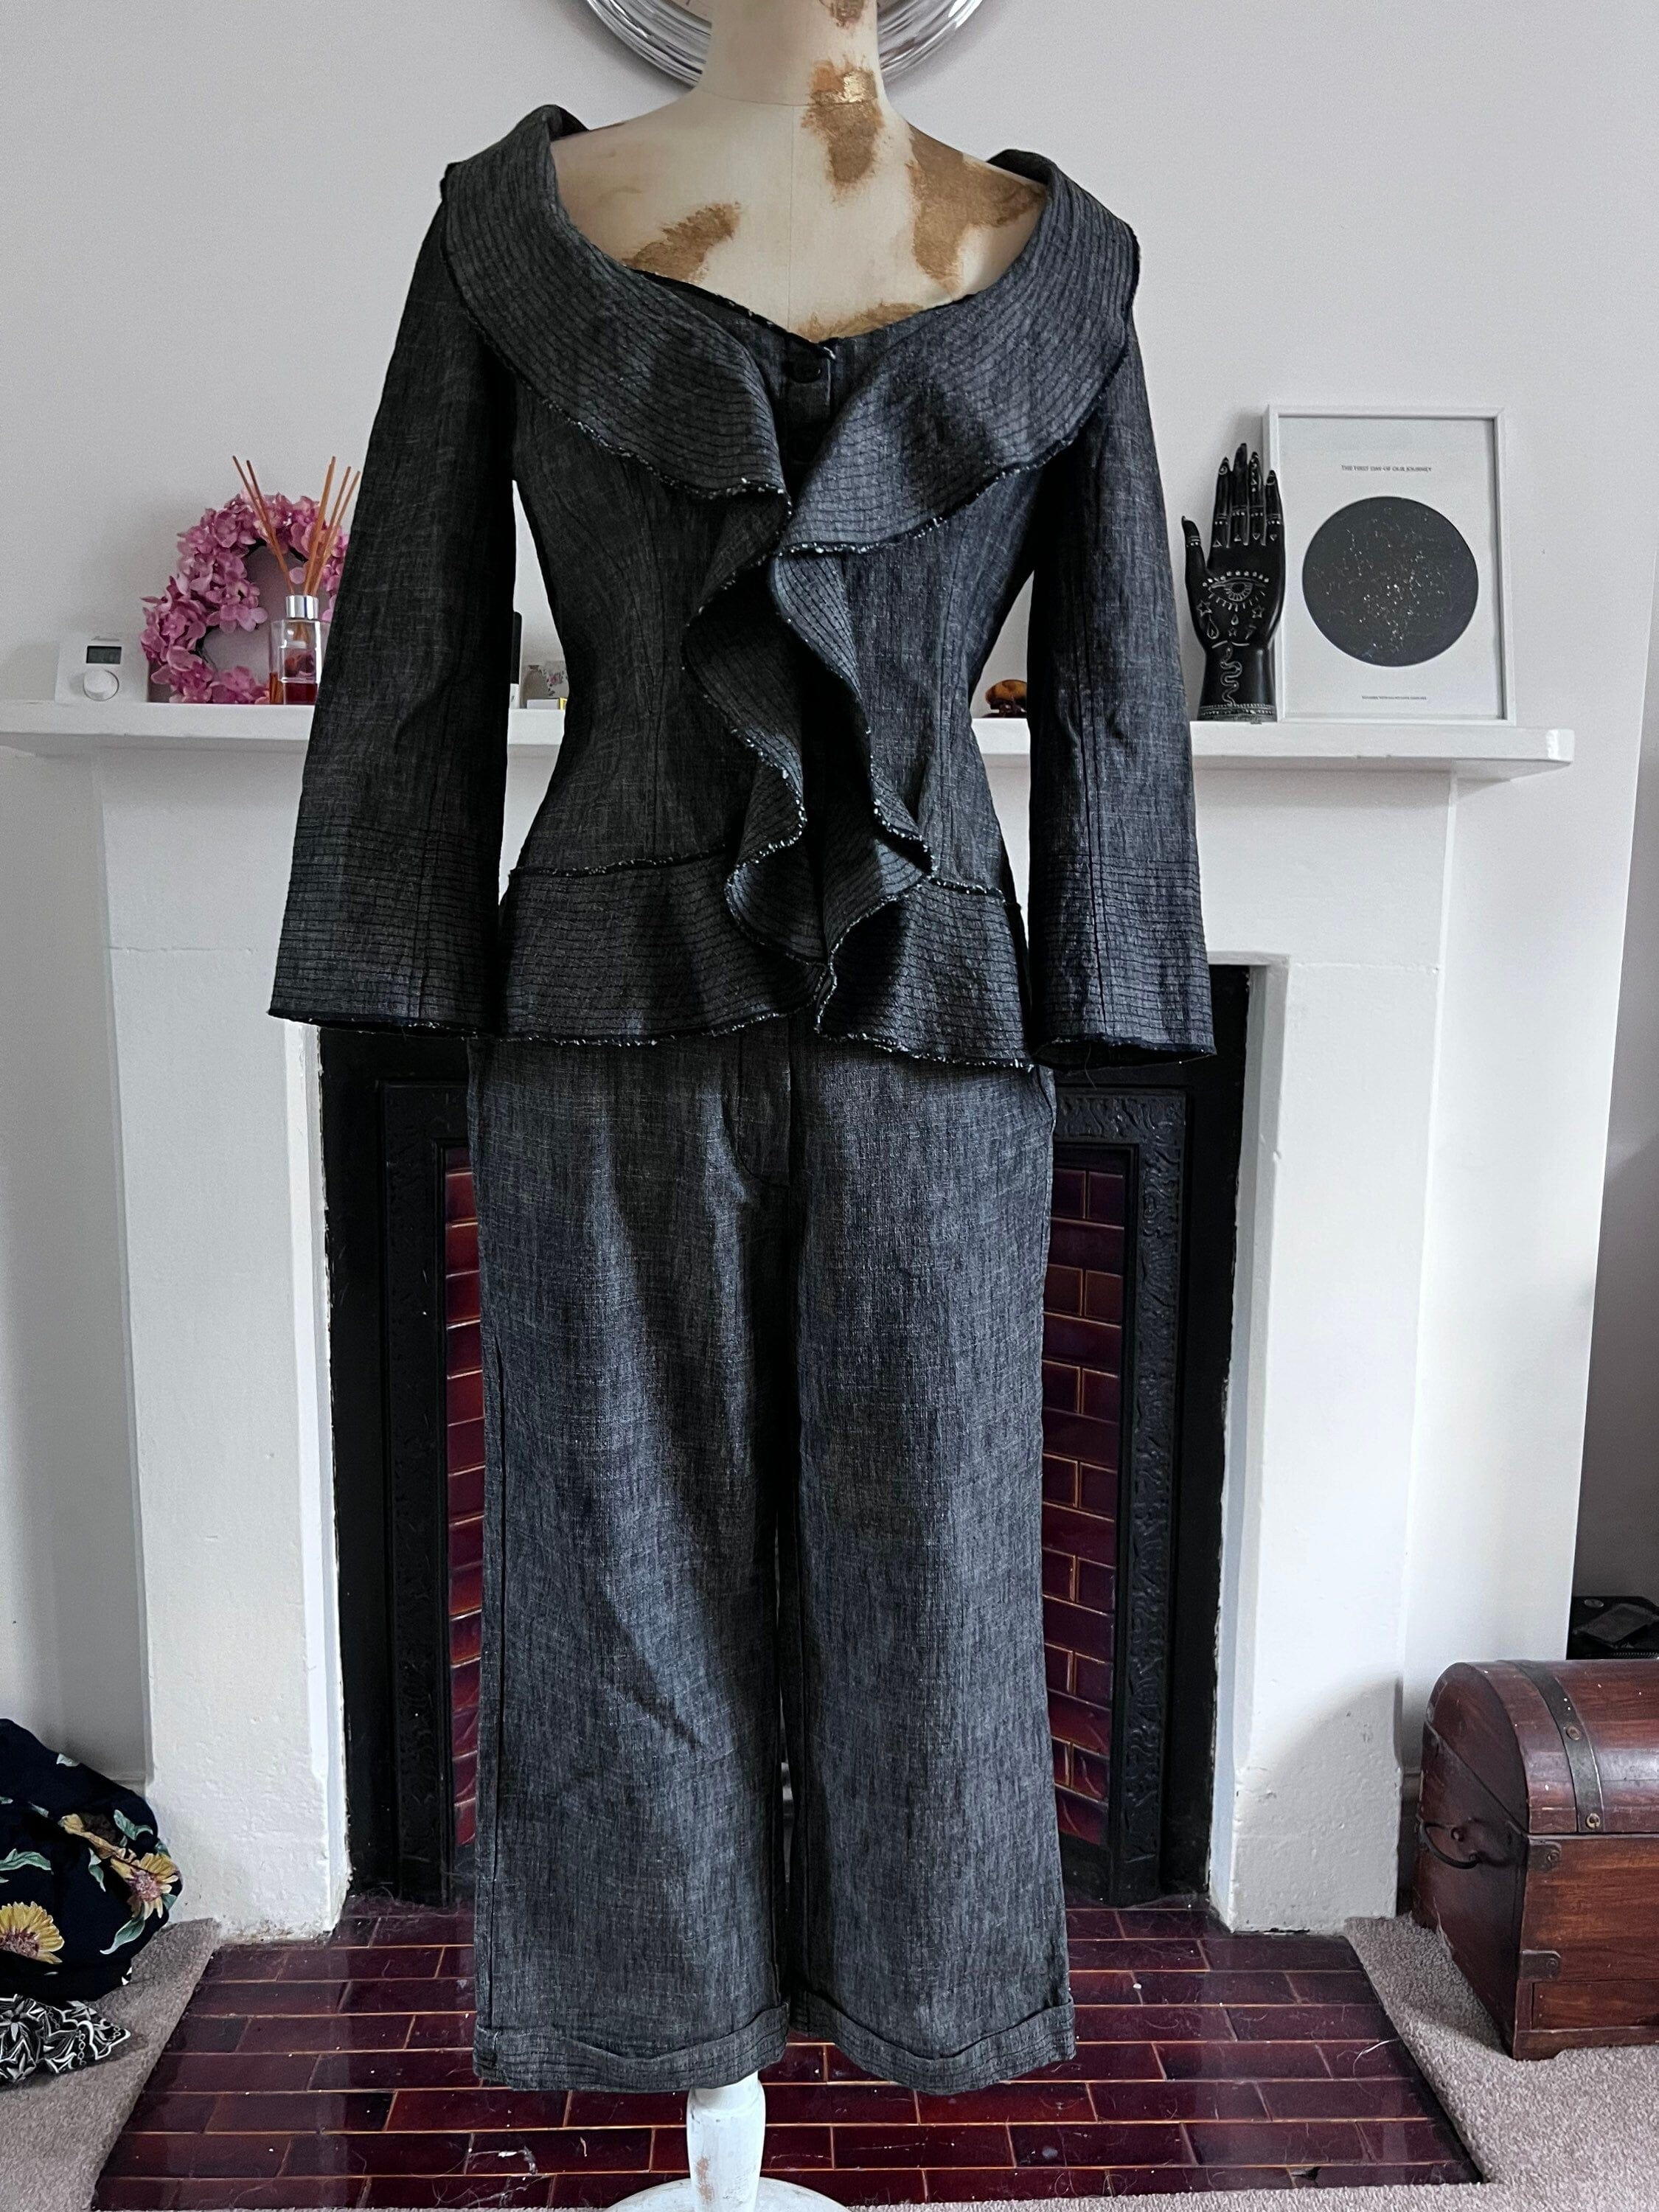 HighEnd Two Piece Trouser Suit in Ngara  Clothing Esther Muema   Jijicoke